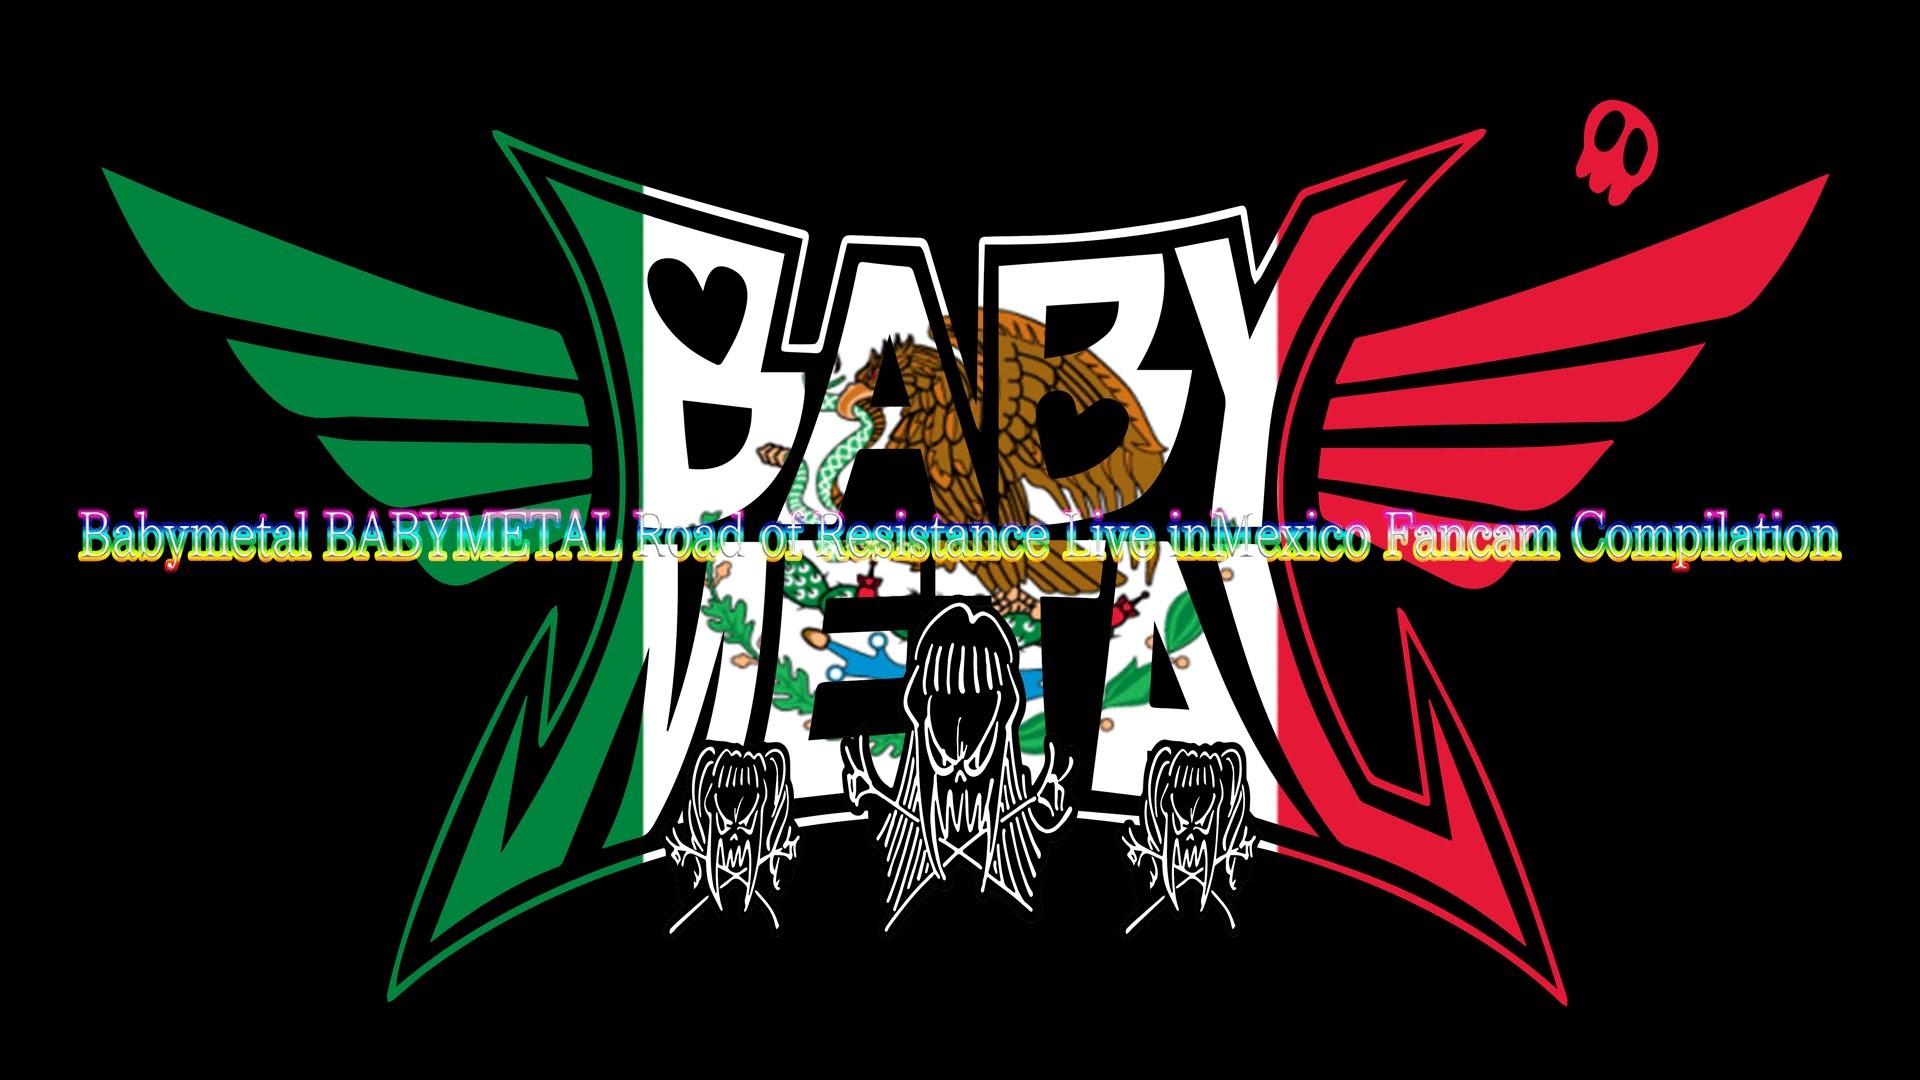 1920x1080 Babymetal BABYMETAL Road of Resistance Live inMexico Fancam Compilation